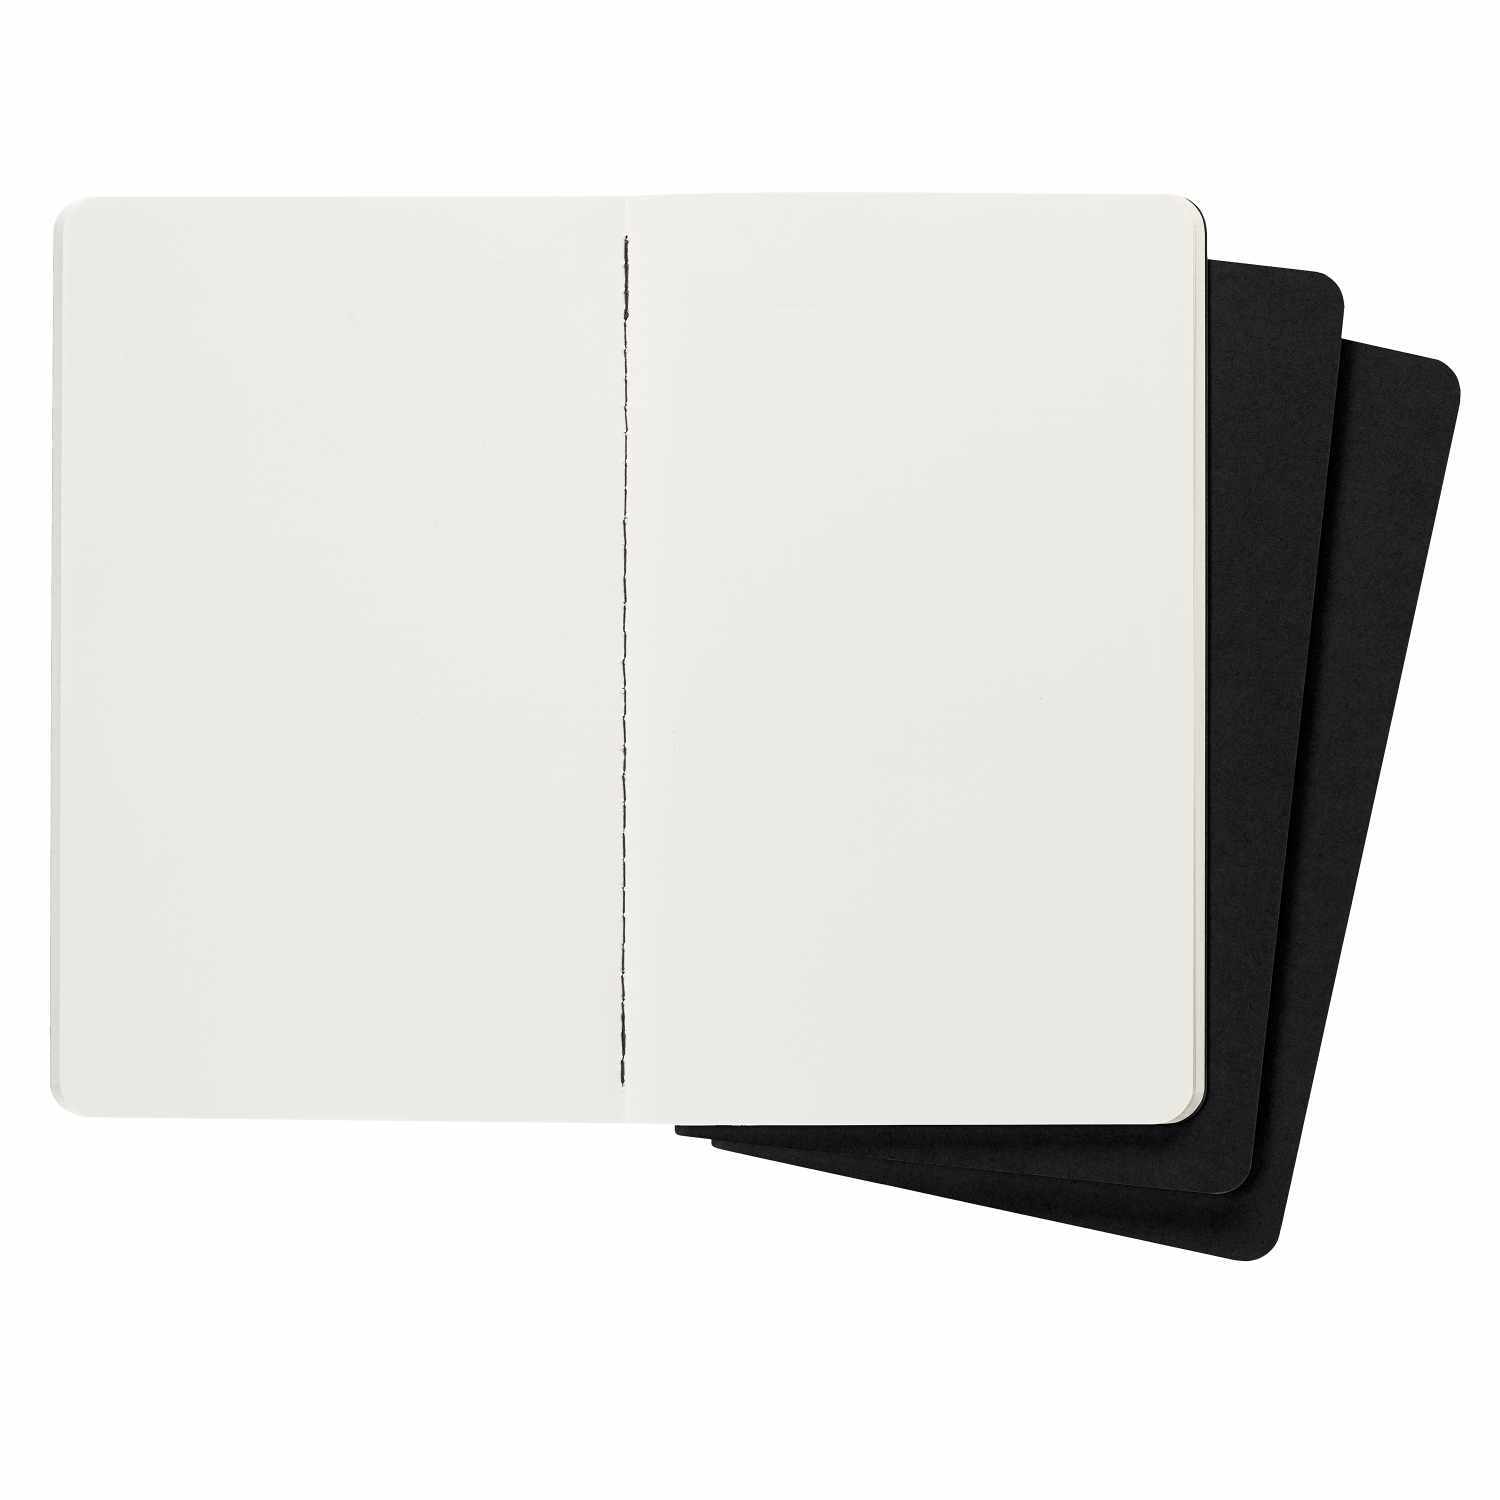 Notizbücher Cahier blanko Kartoneinband A5 3 Stück